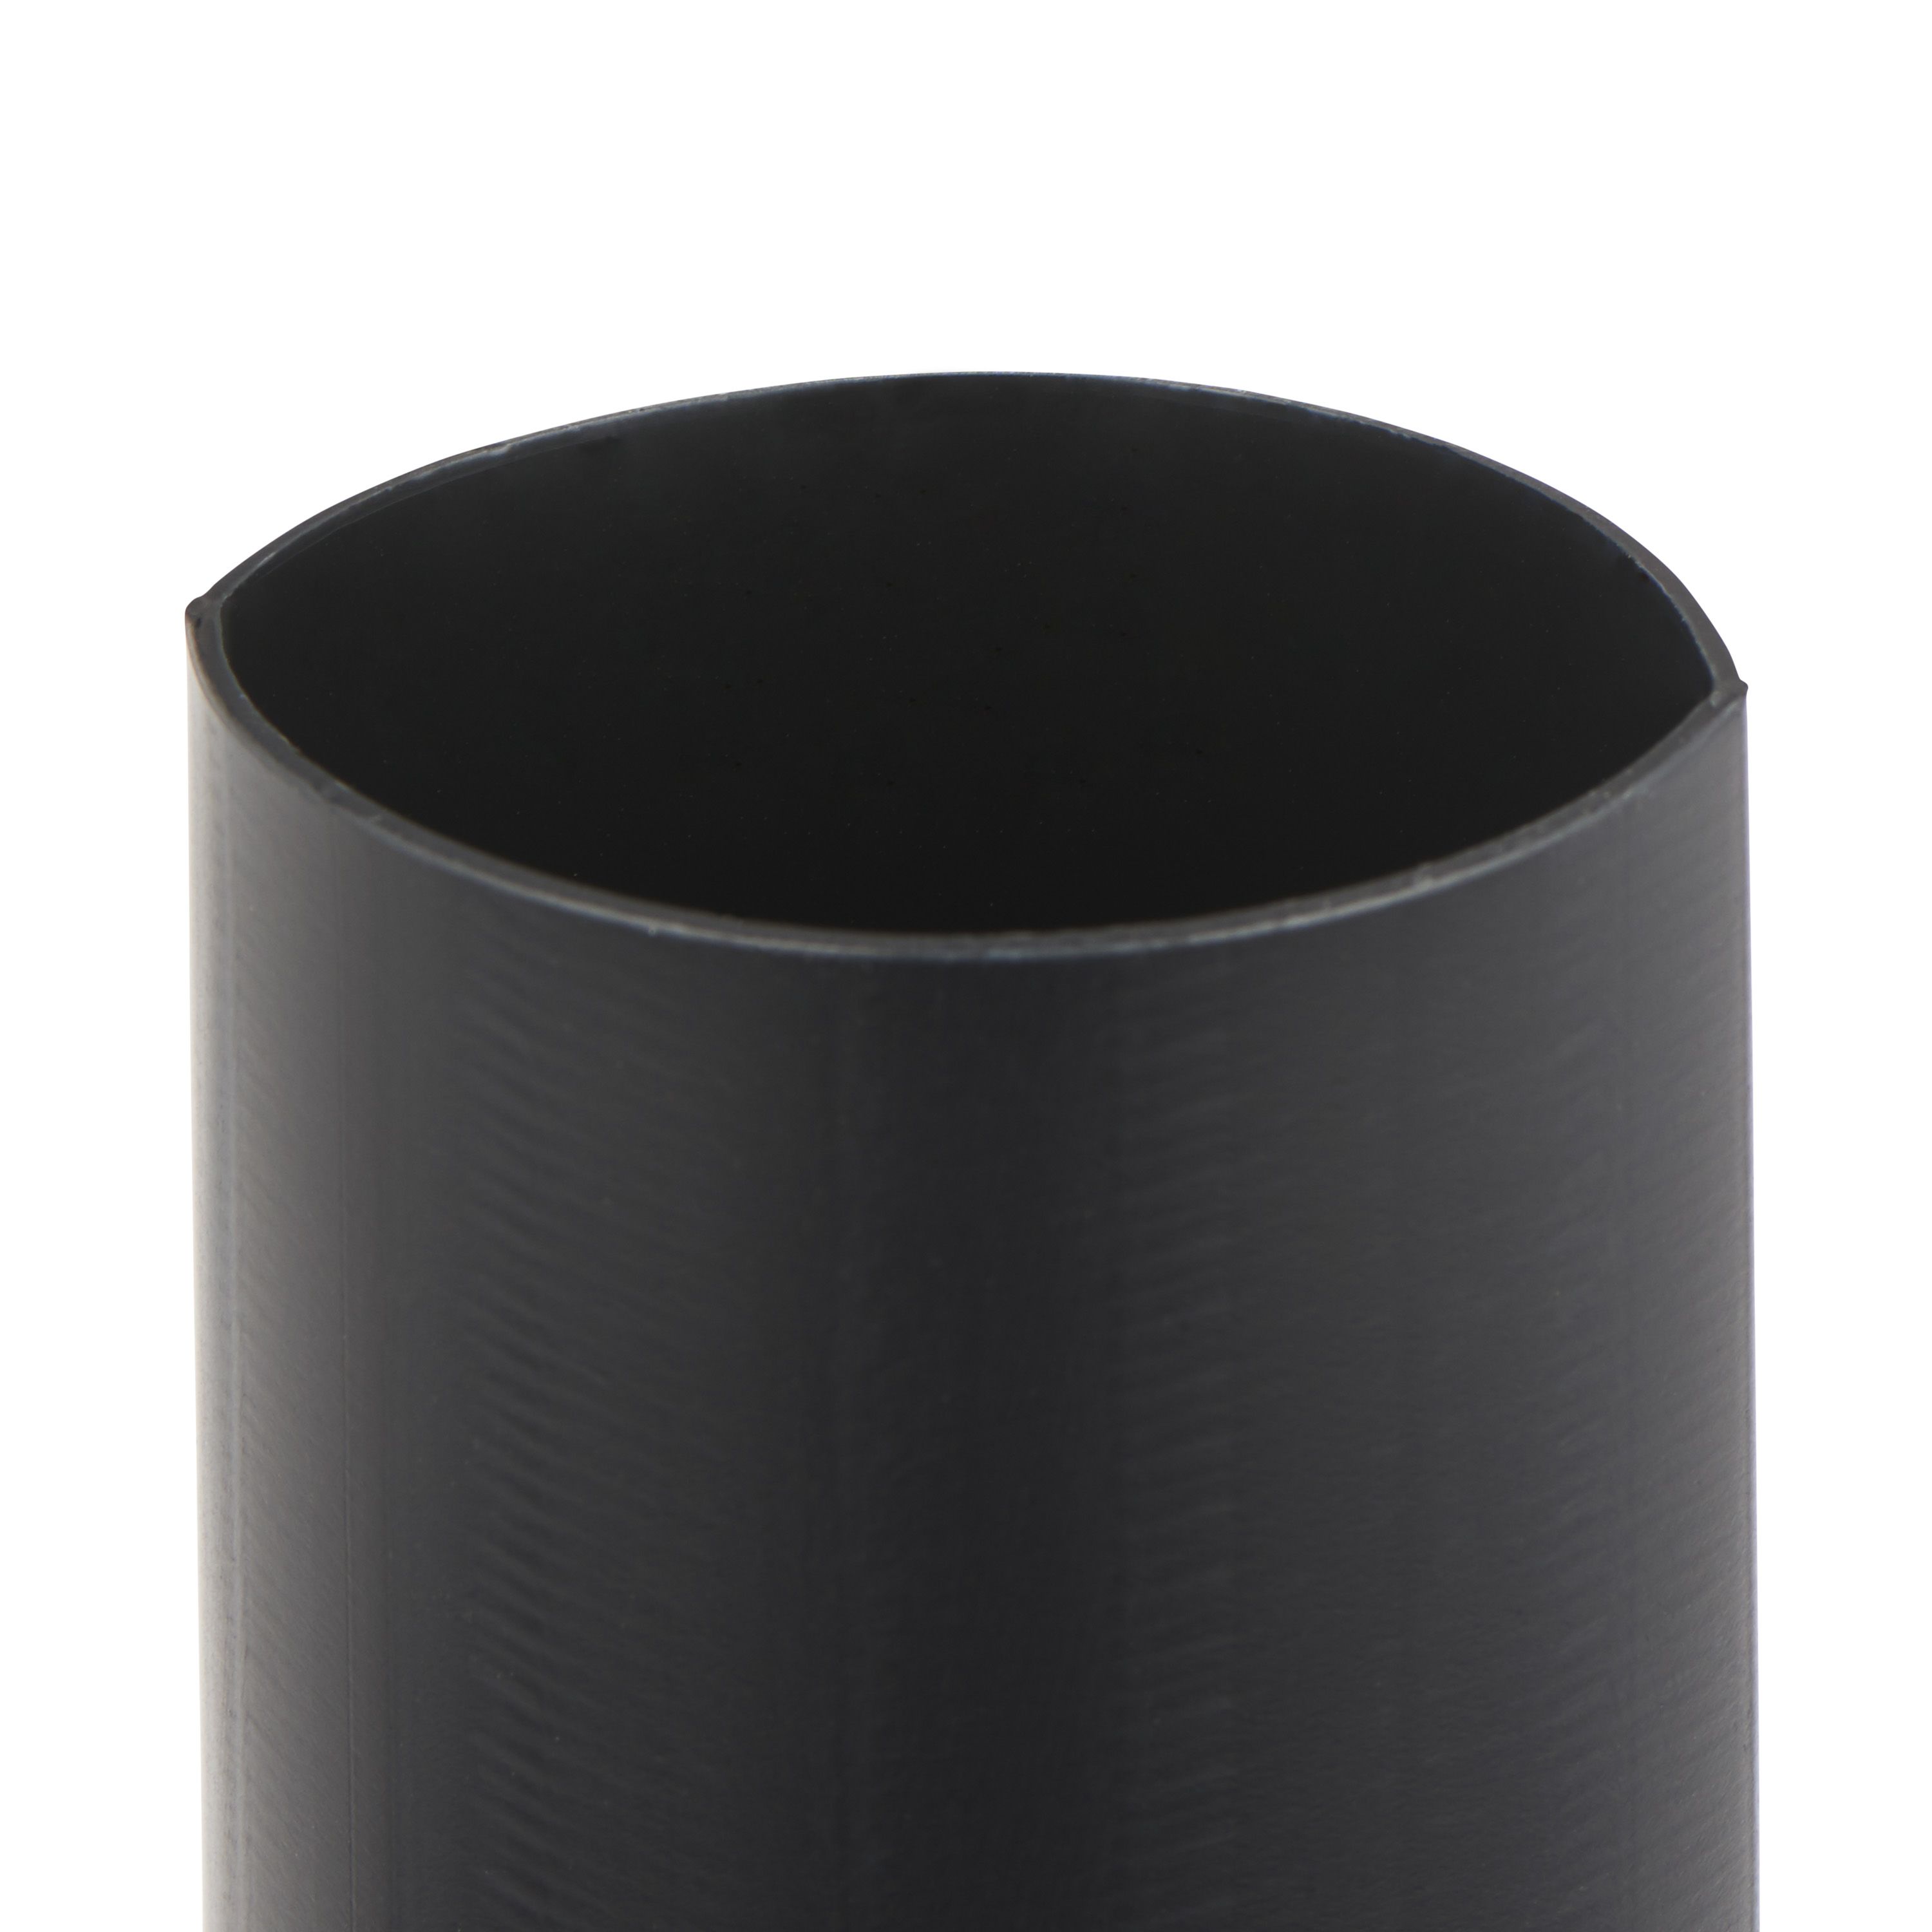 Tubo termorretráctil 3M de Poliolefina Negro, contracción 4.5:1, Ø 32mm, long. 1m, forrado con adhesivo